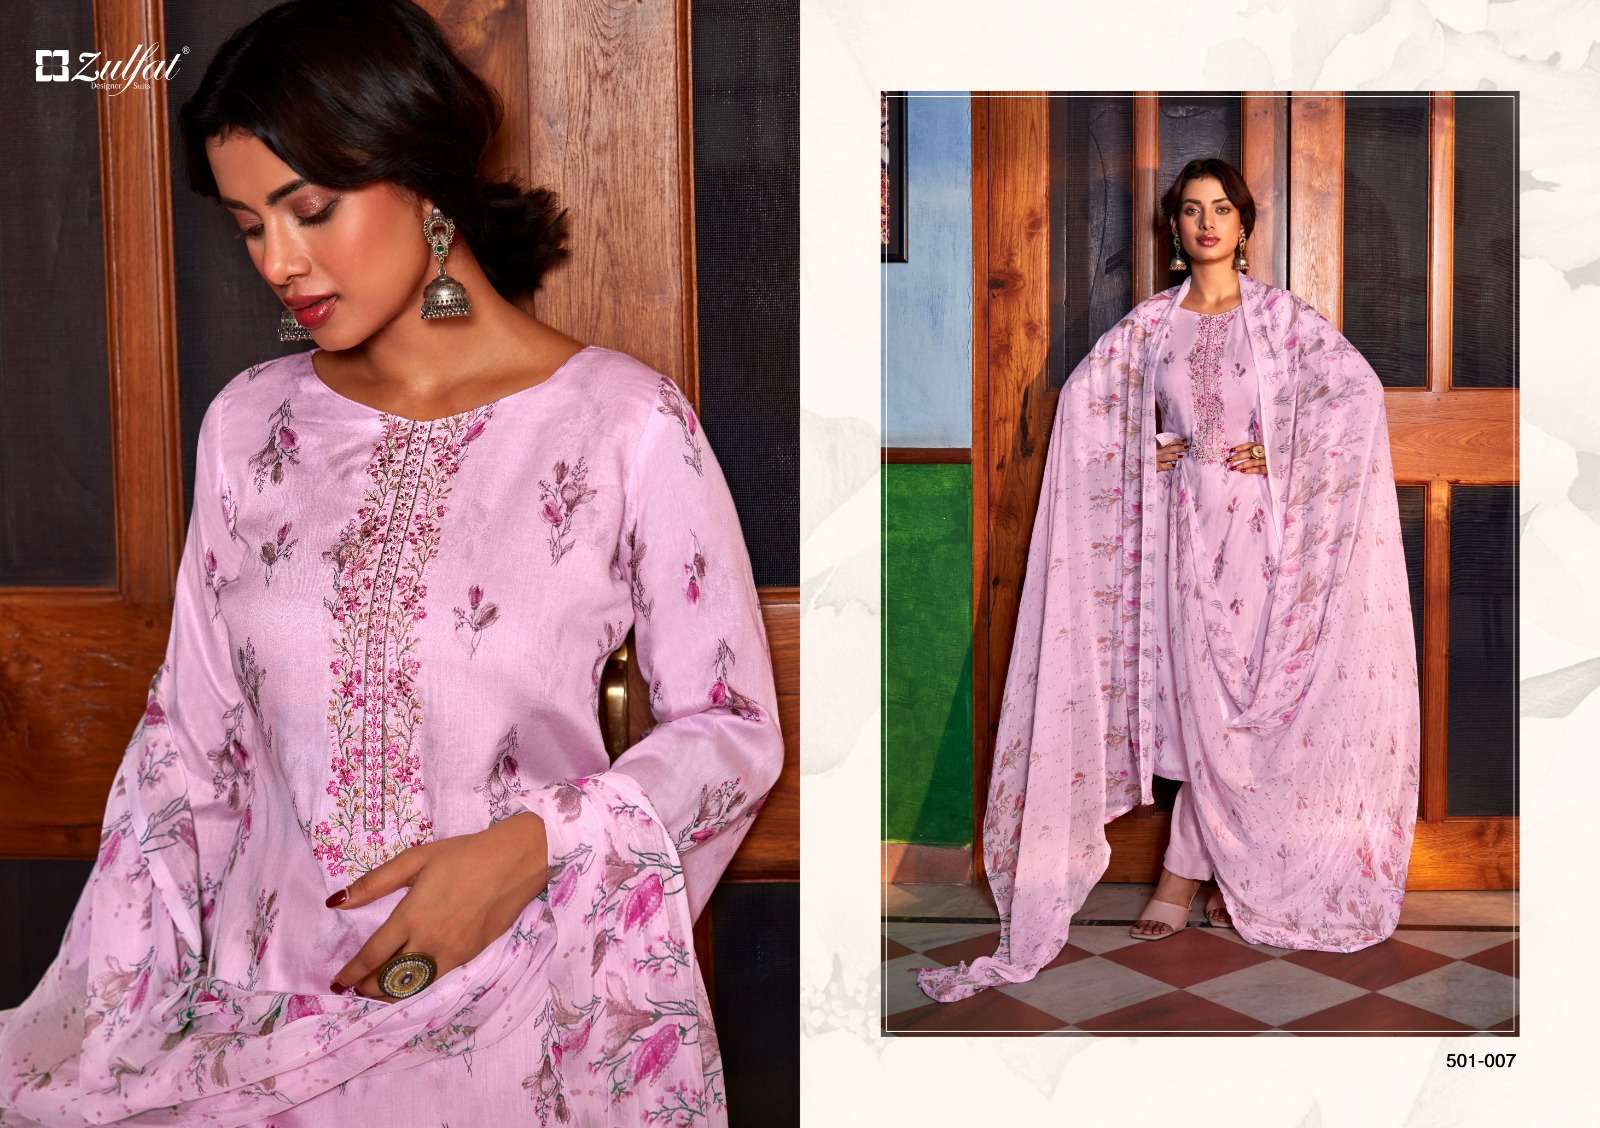 zulfat designer dilreet pure jam cotton unstich salwar suits collection wholesale prce 